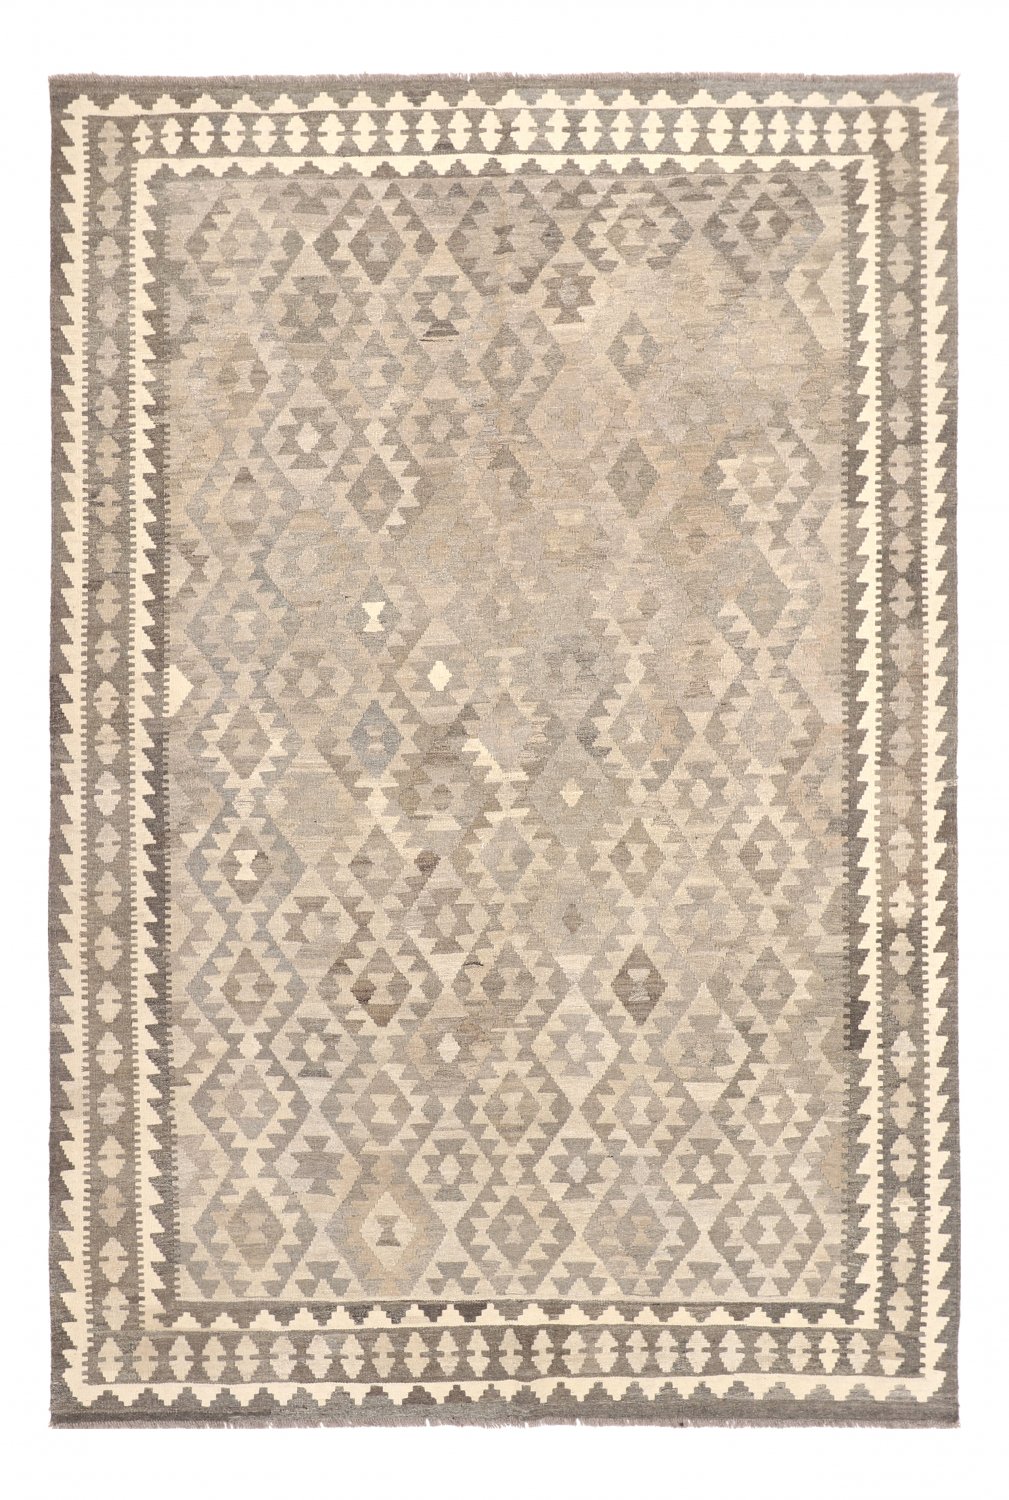 Kilim rug Afghan 296 x 202 cm